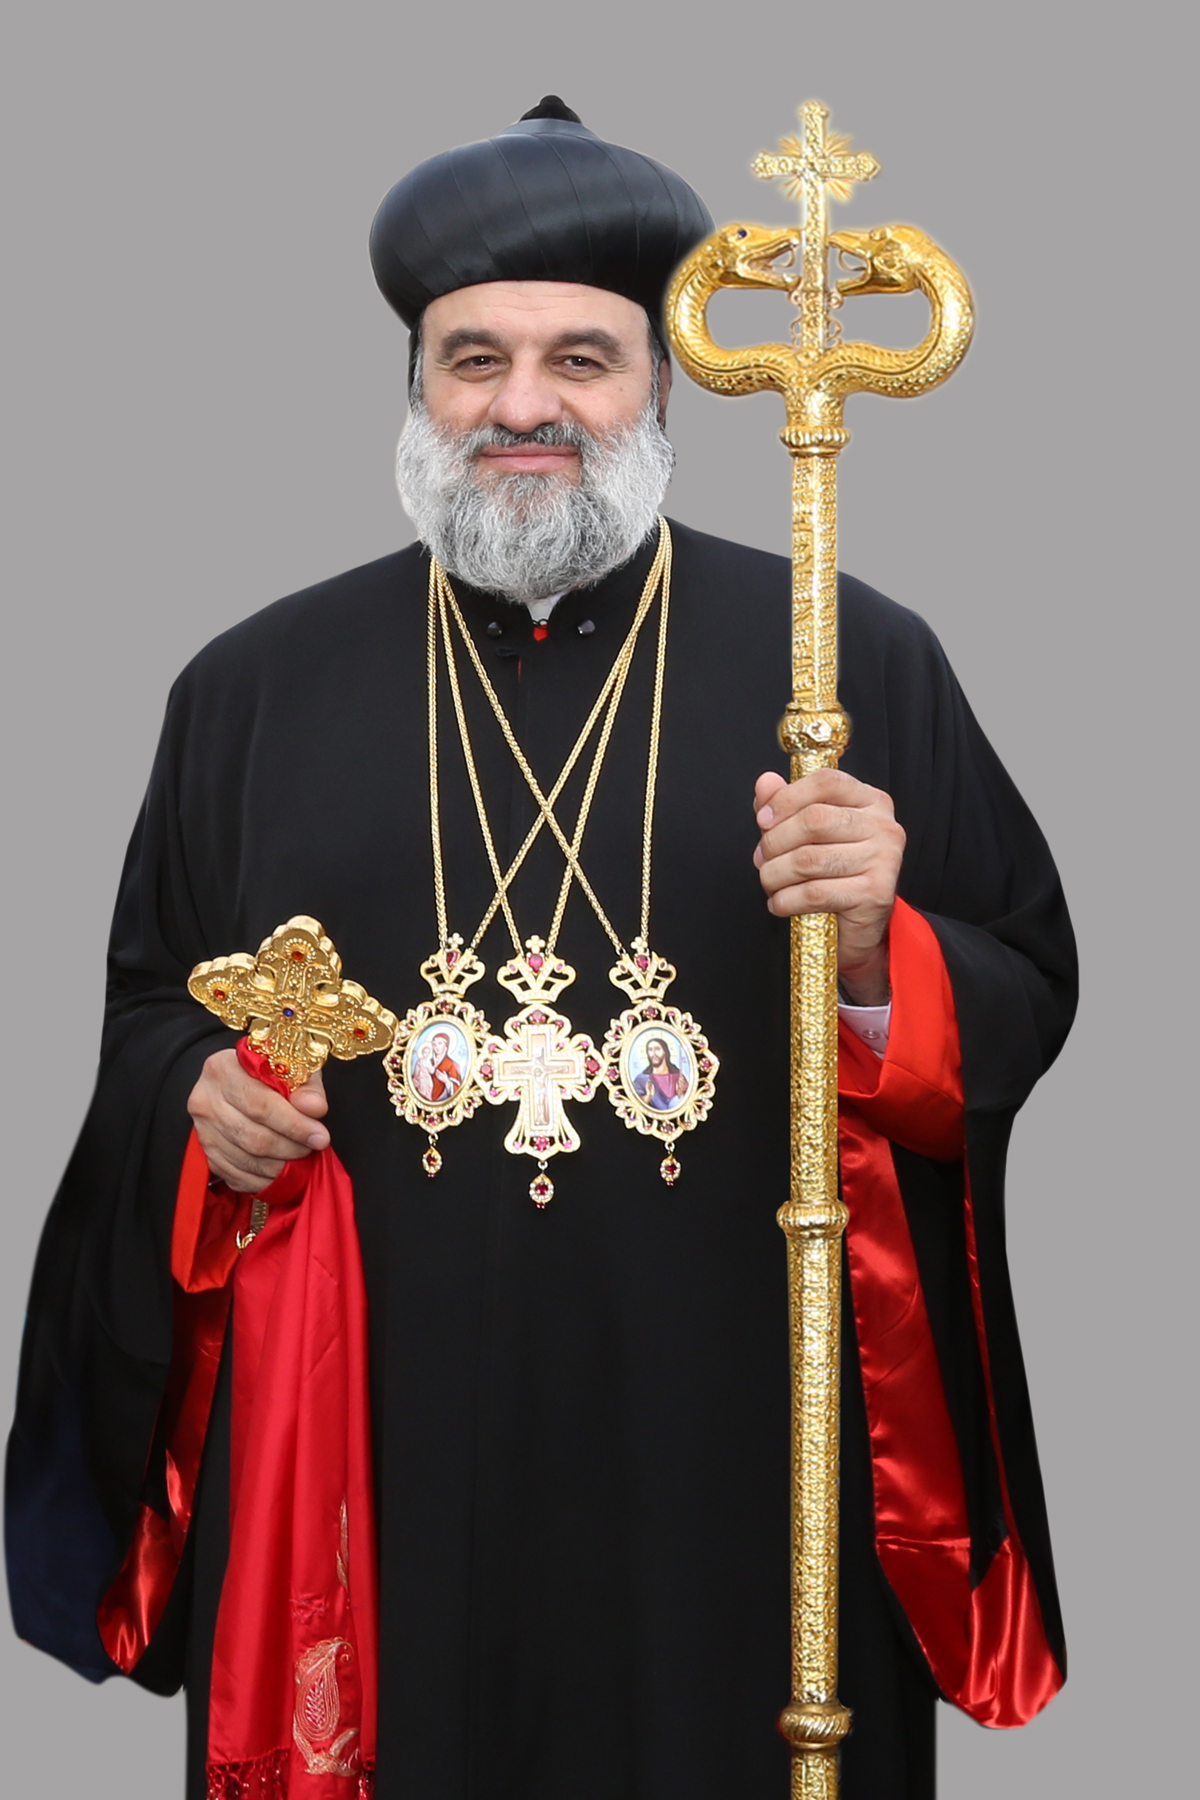 Nativity-Christmas Message from Patriarch Ignatius Aphrem II